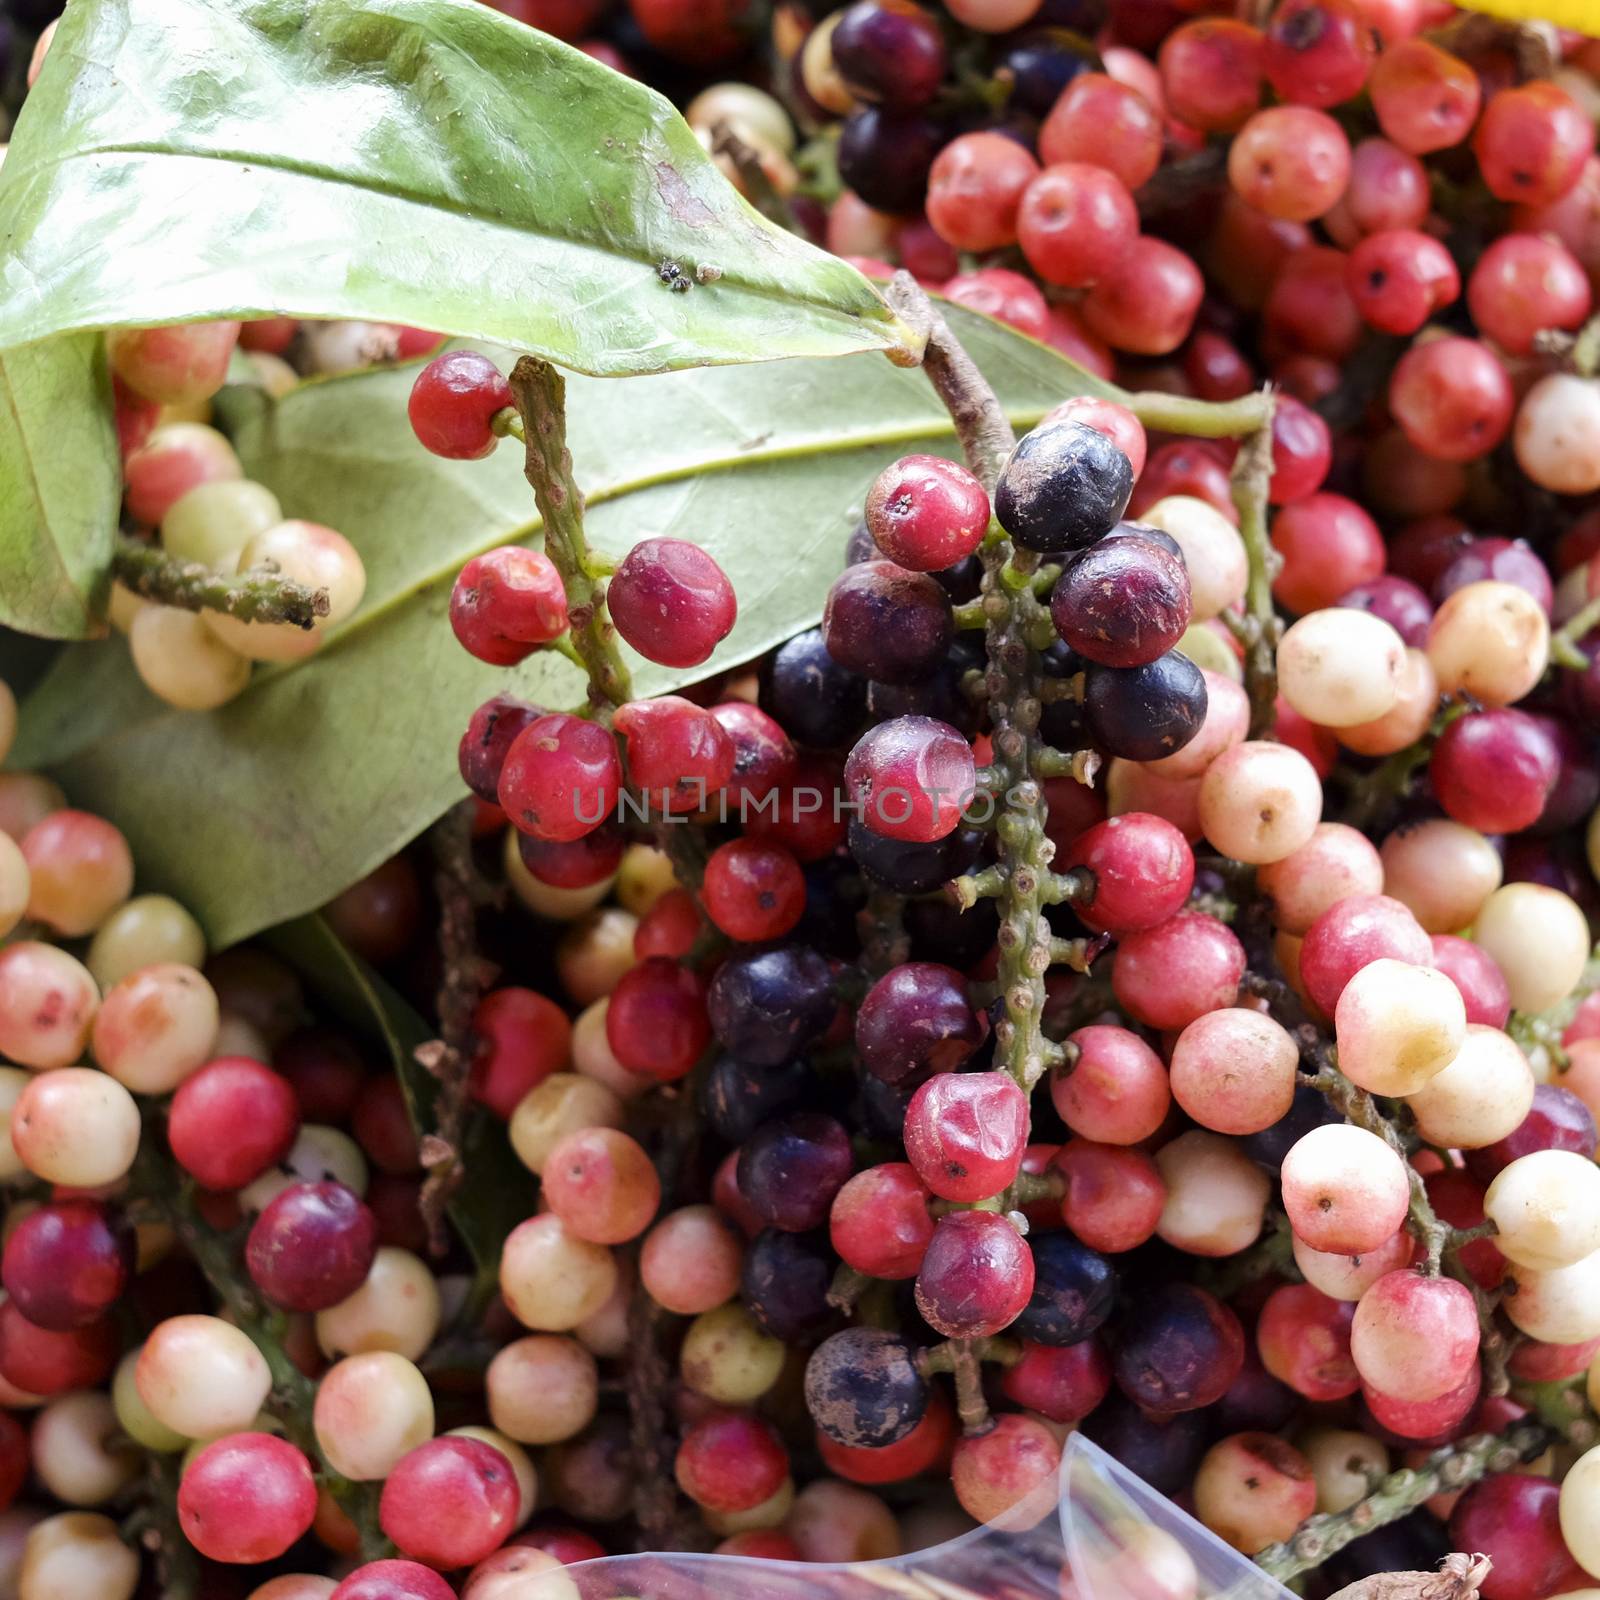 Antidesma thwaitesianum Mull.Arg., Ma-mao (thai name) Isan region of Thailand fruit with medicinal properties.